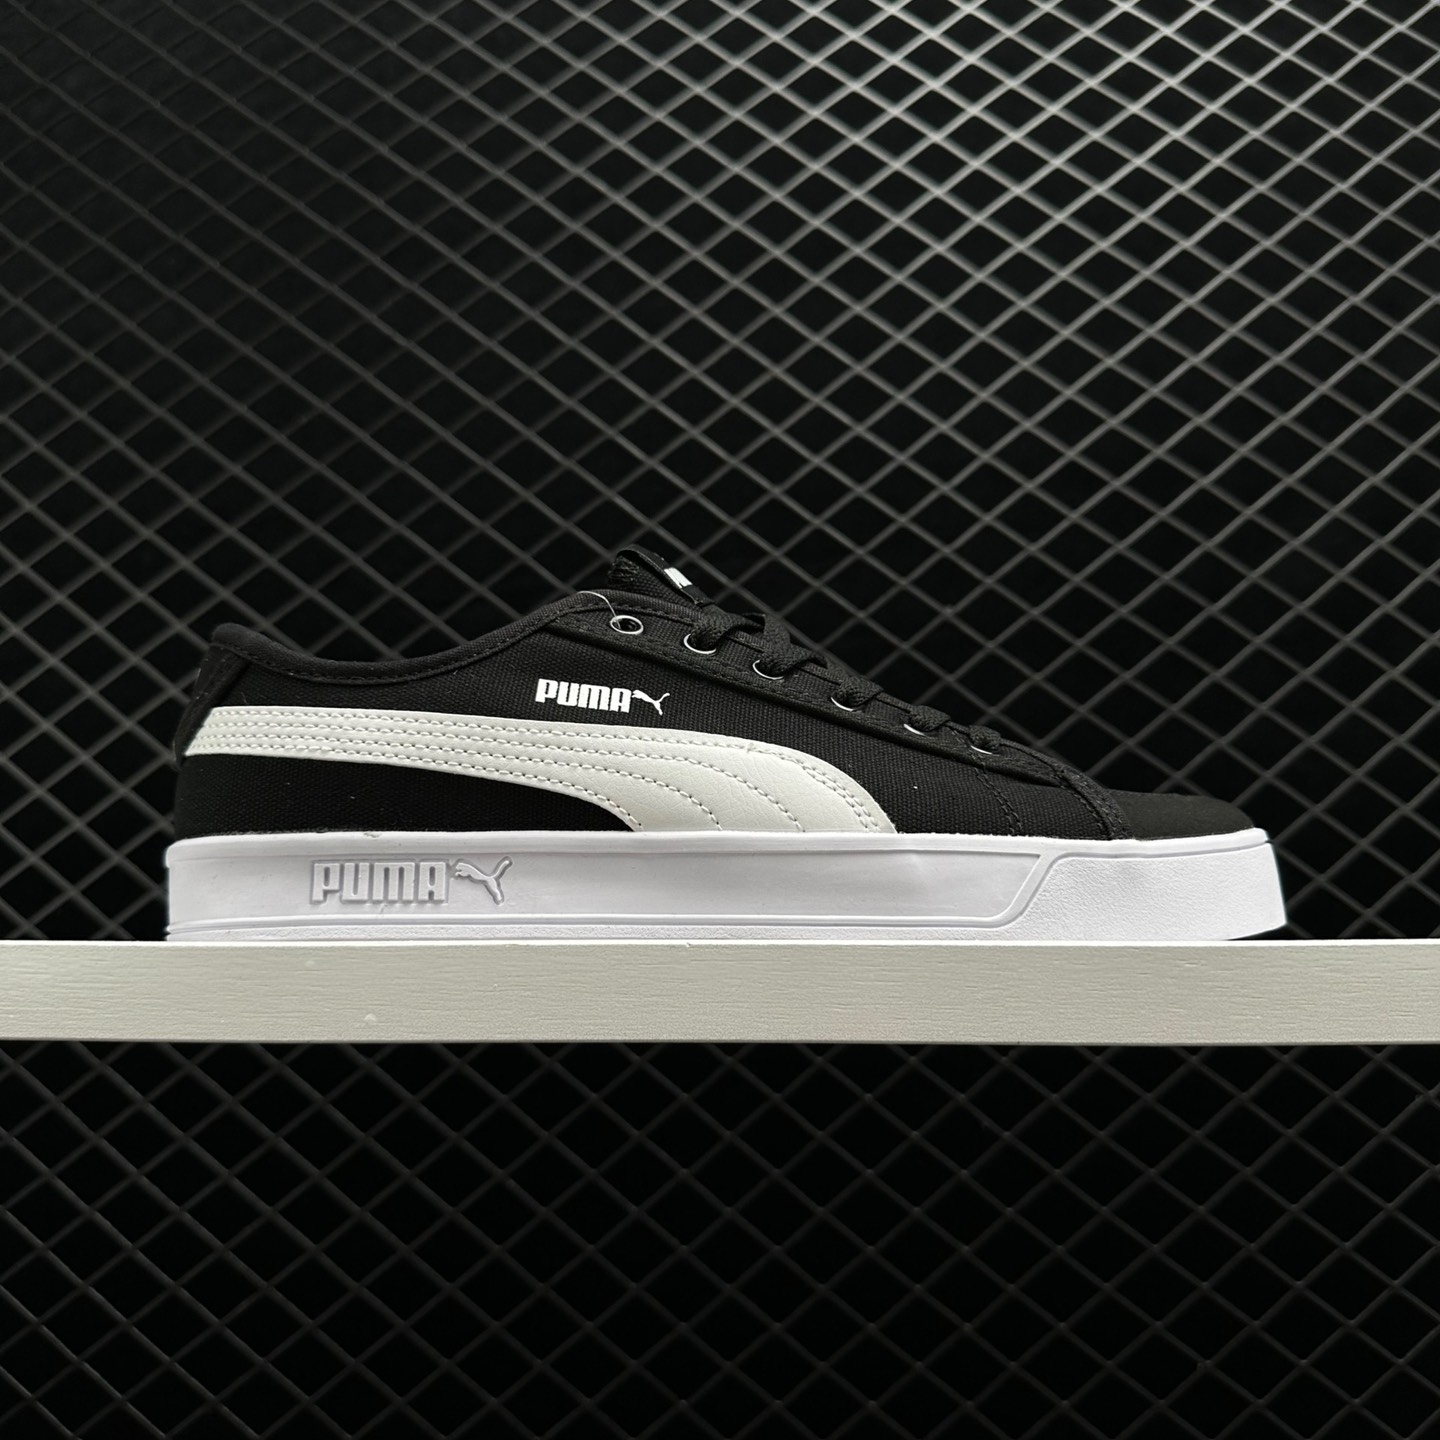 Puma Smash v2 Vulc CV 365968 01 - Black White Sneakers | Shop Now!